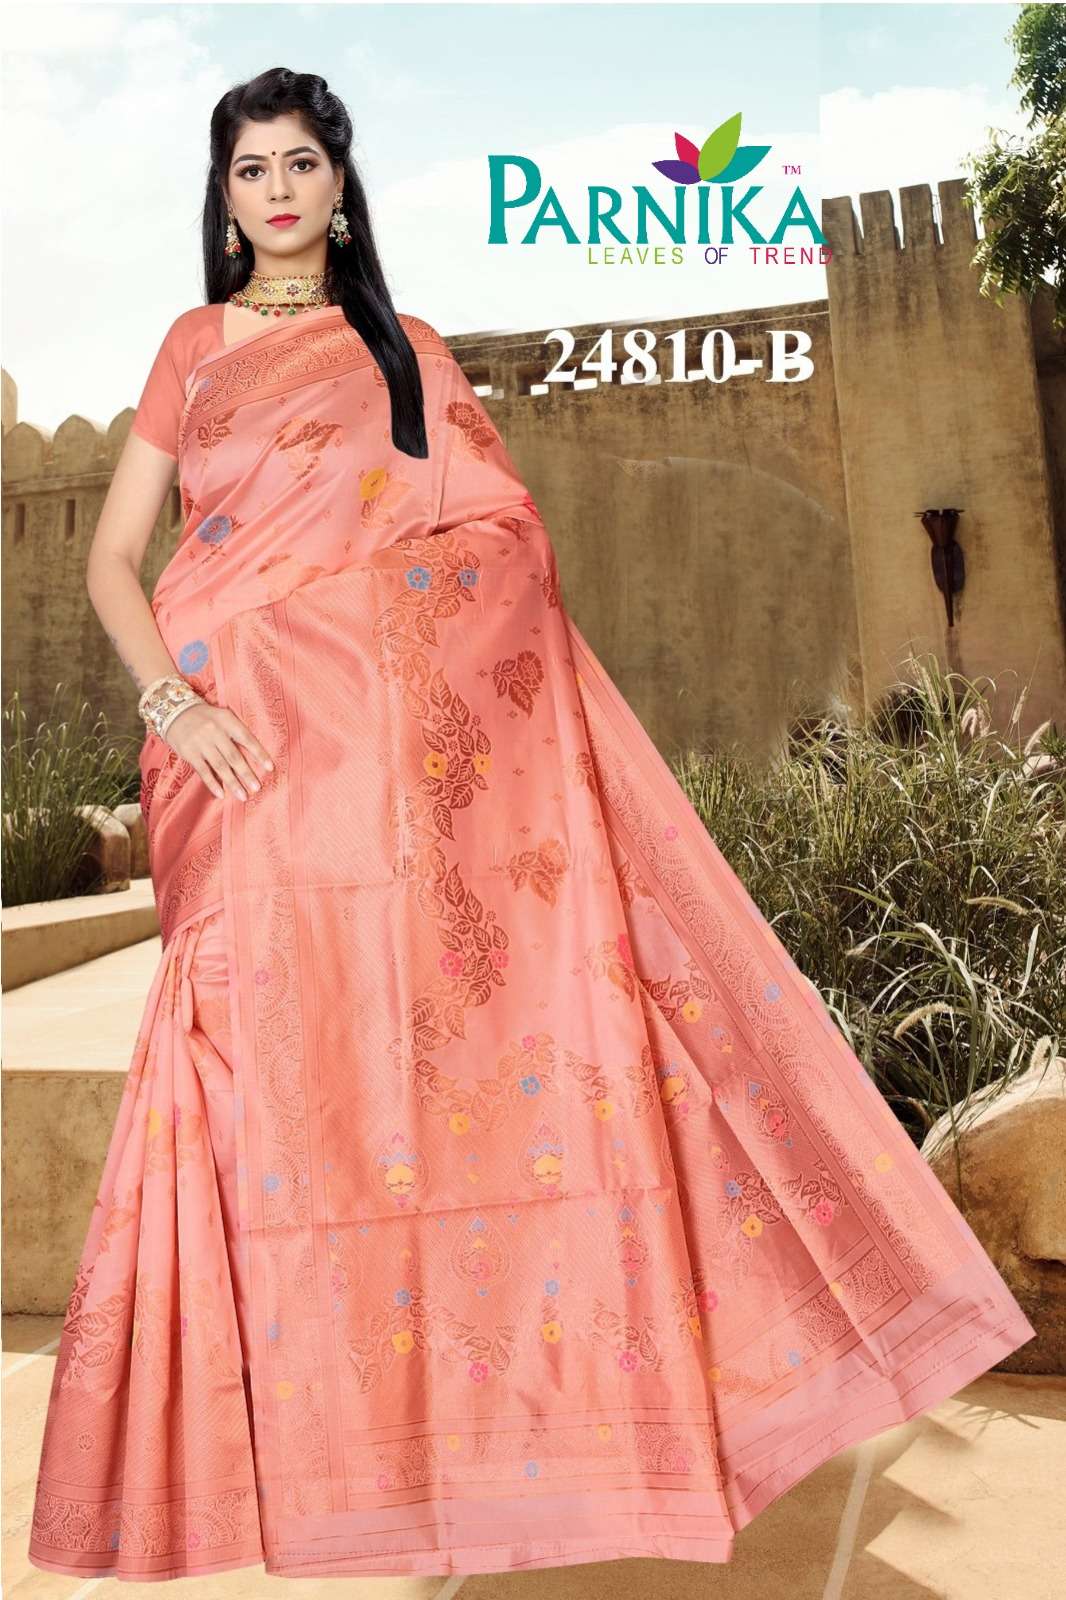 Parnika India Lichi Silk Jacquard Sarees Festive Wear Wedding Saree in Wholesale rate - 24810